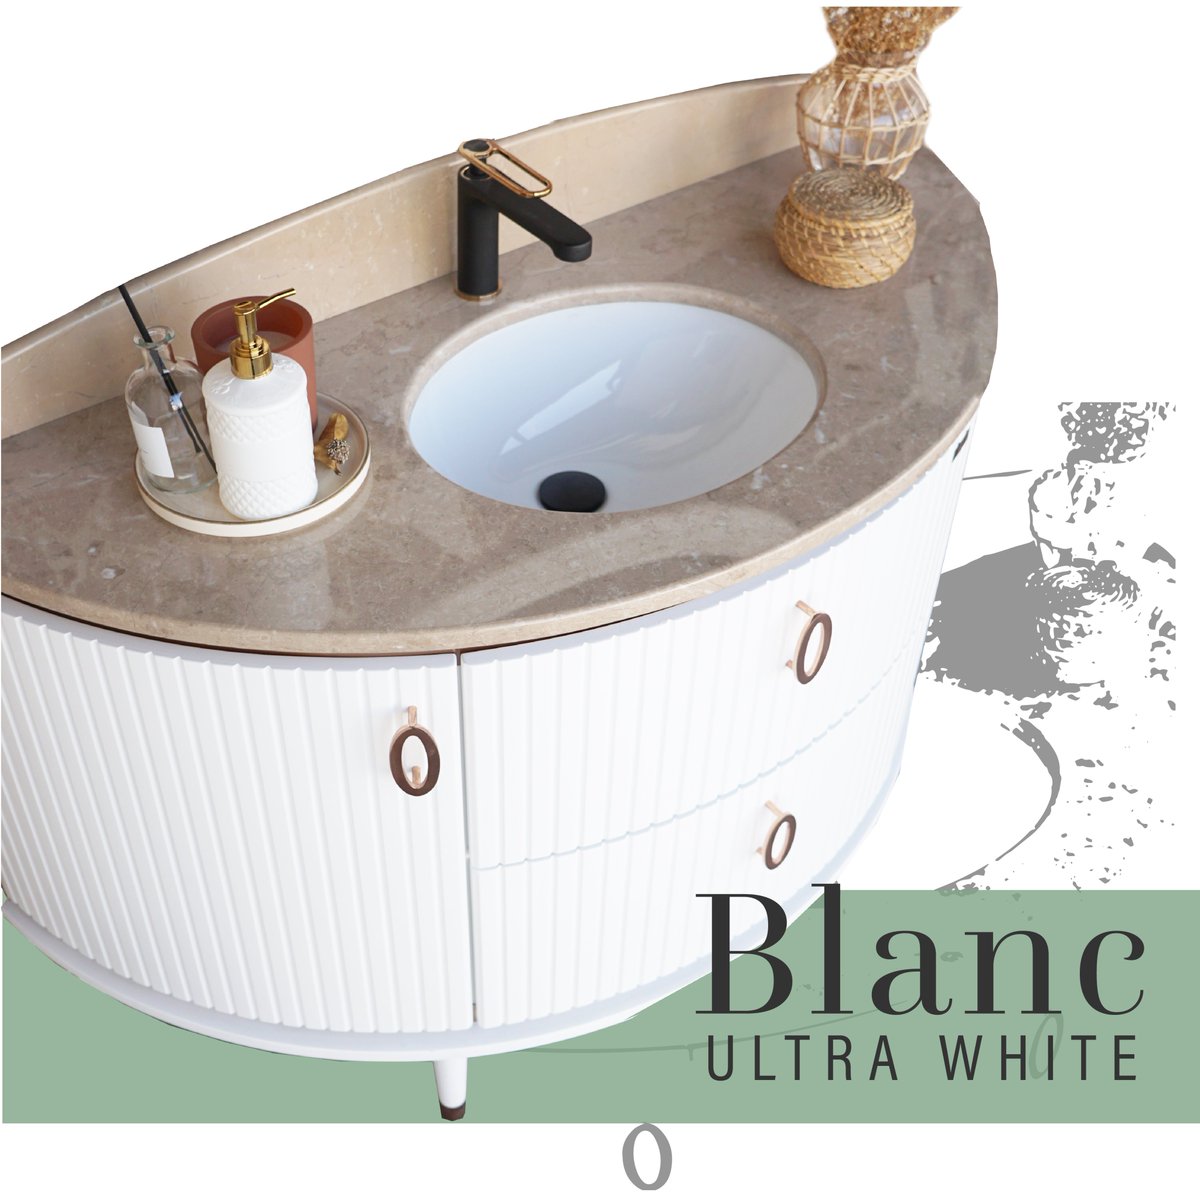 Blanc Serisi’nin ultra beyaz rengi ile sükunetin izinde bir banyo deneyimi! A bathroom experience in the footsteps of tranquility with the ultra white color of Blanc Series! #voq #voqbagno #lamodainbagno #arredobagno #bathroomfurniture #banyomobilyası #blanc